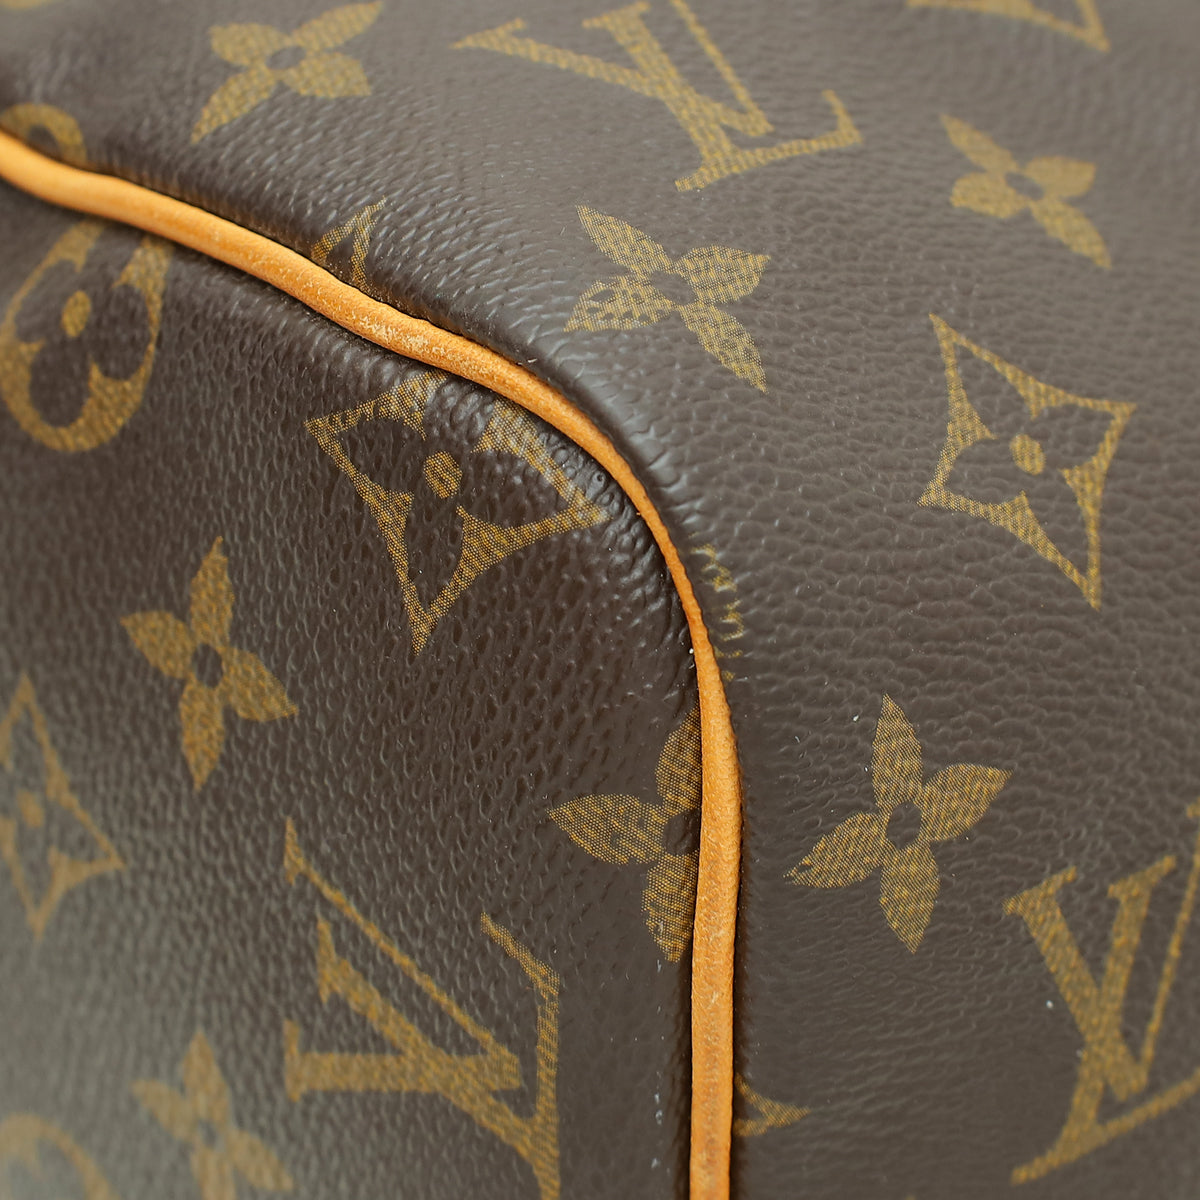 Louis Vuitton Monogram Speedy 30 Bag